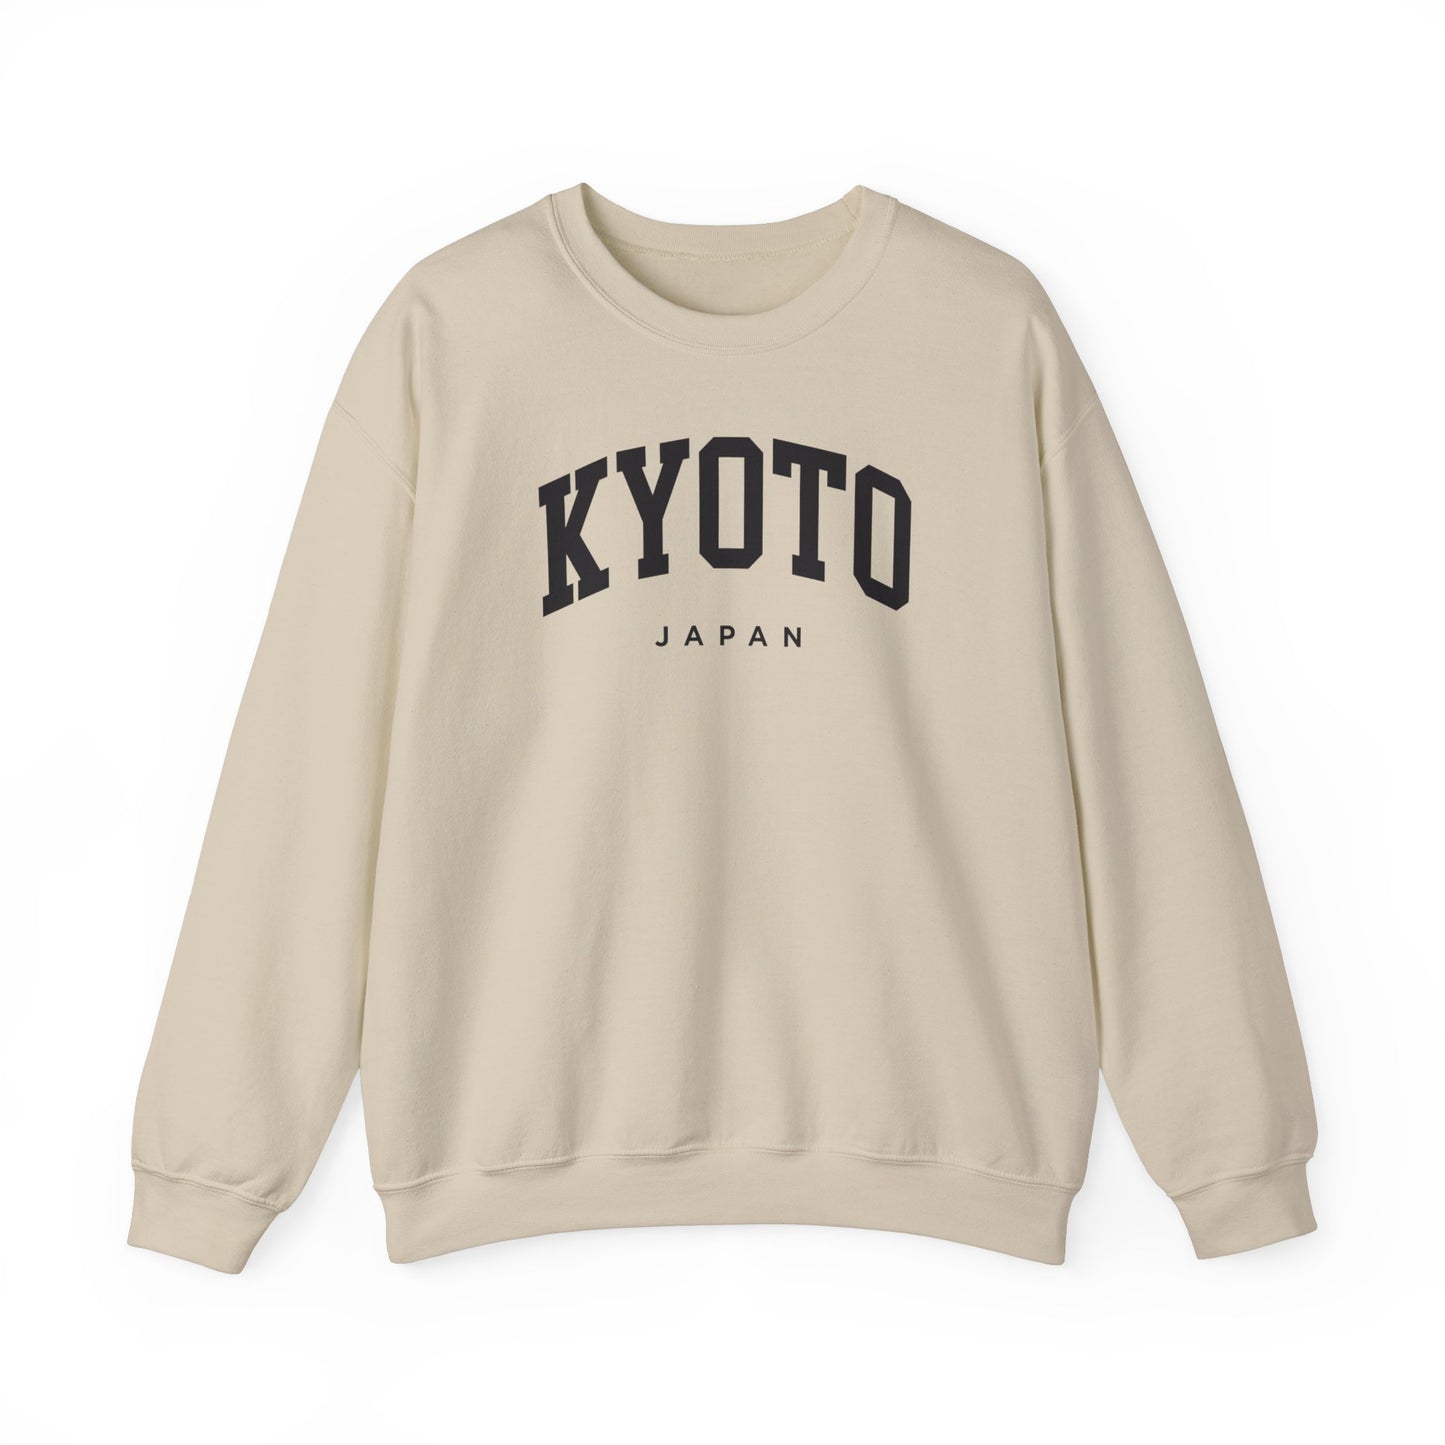 Kyoto Japan Sweatshirt